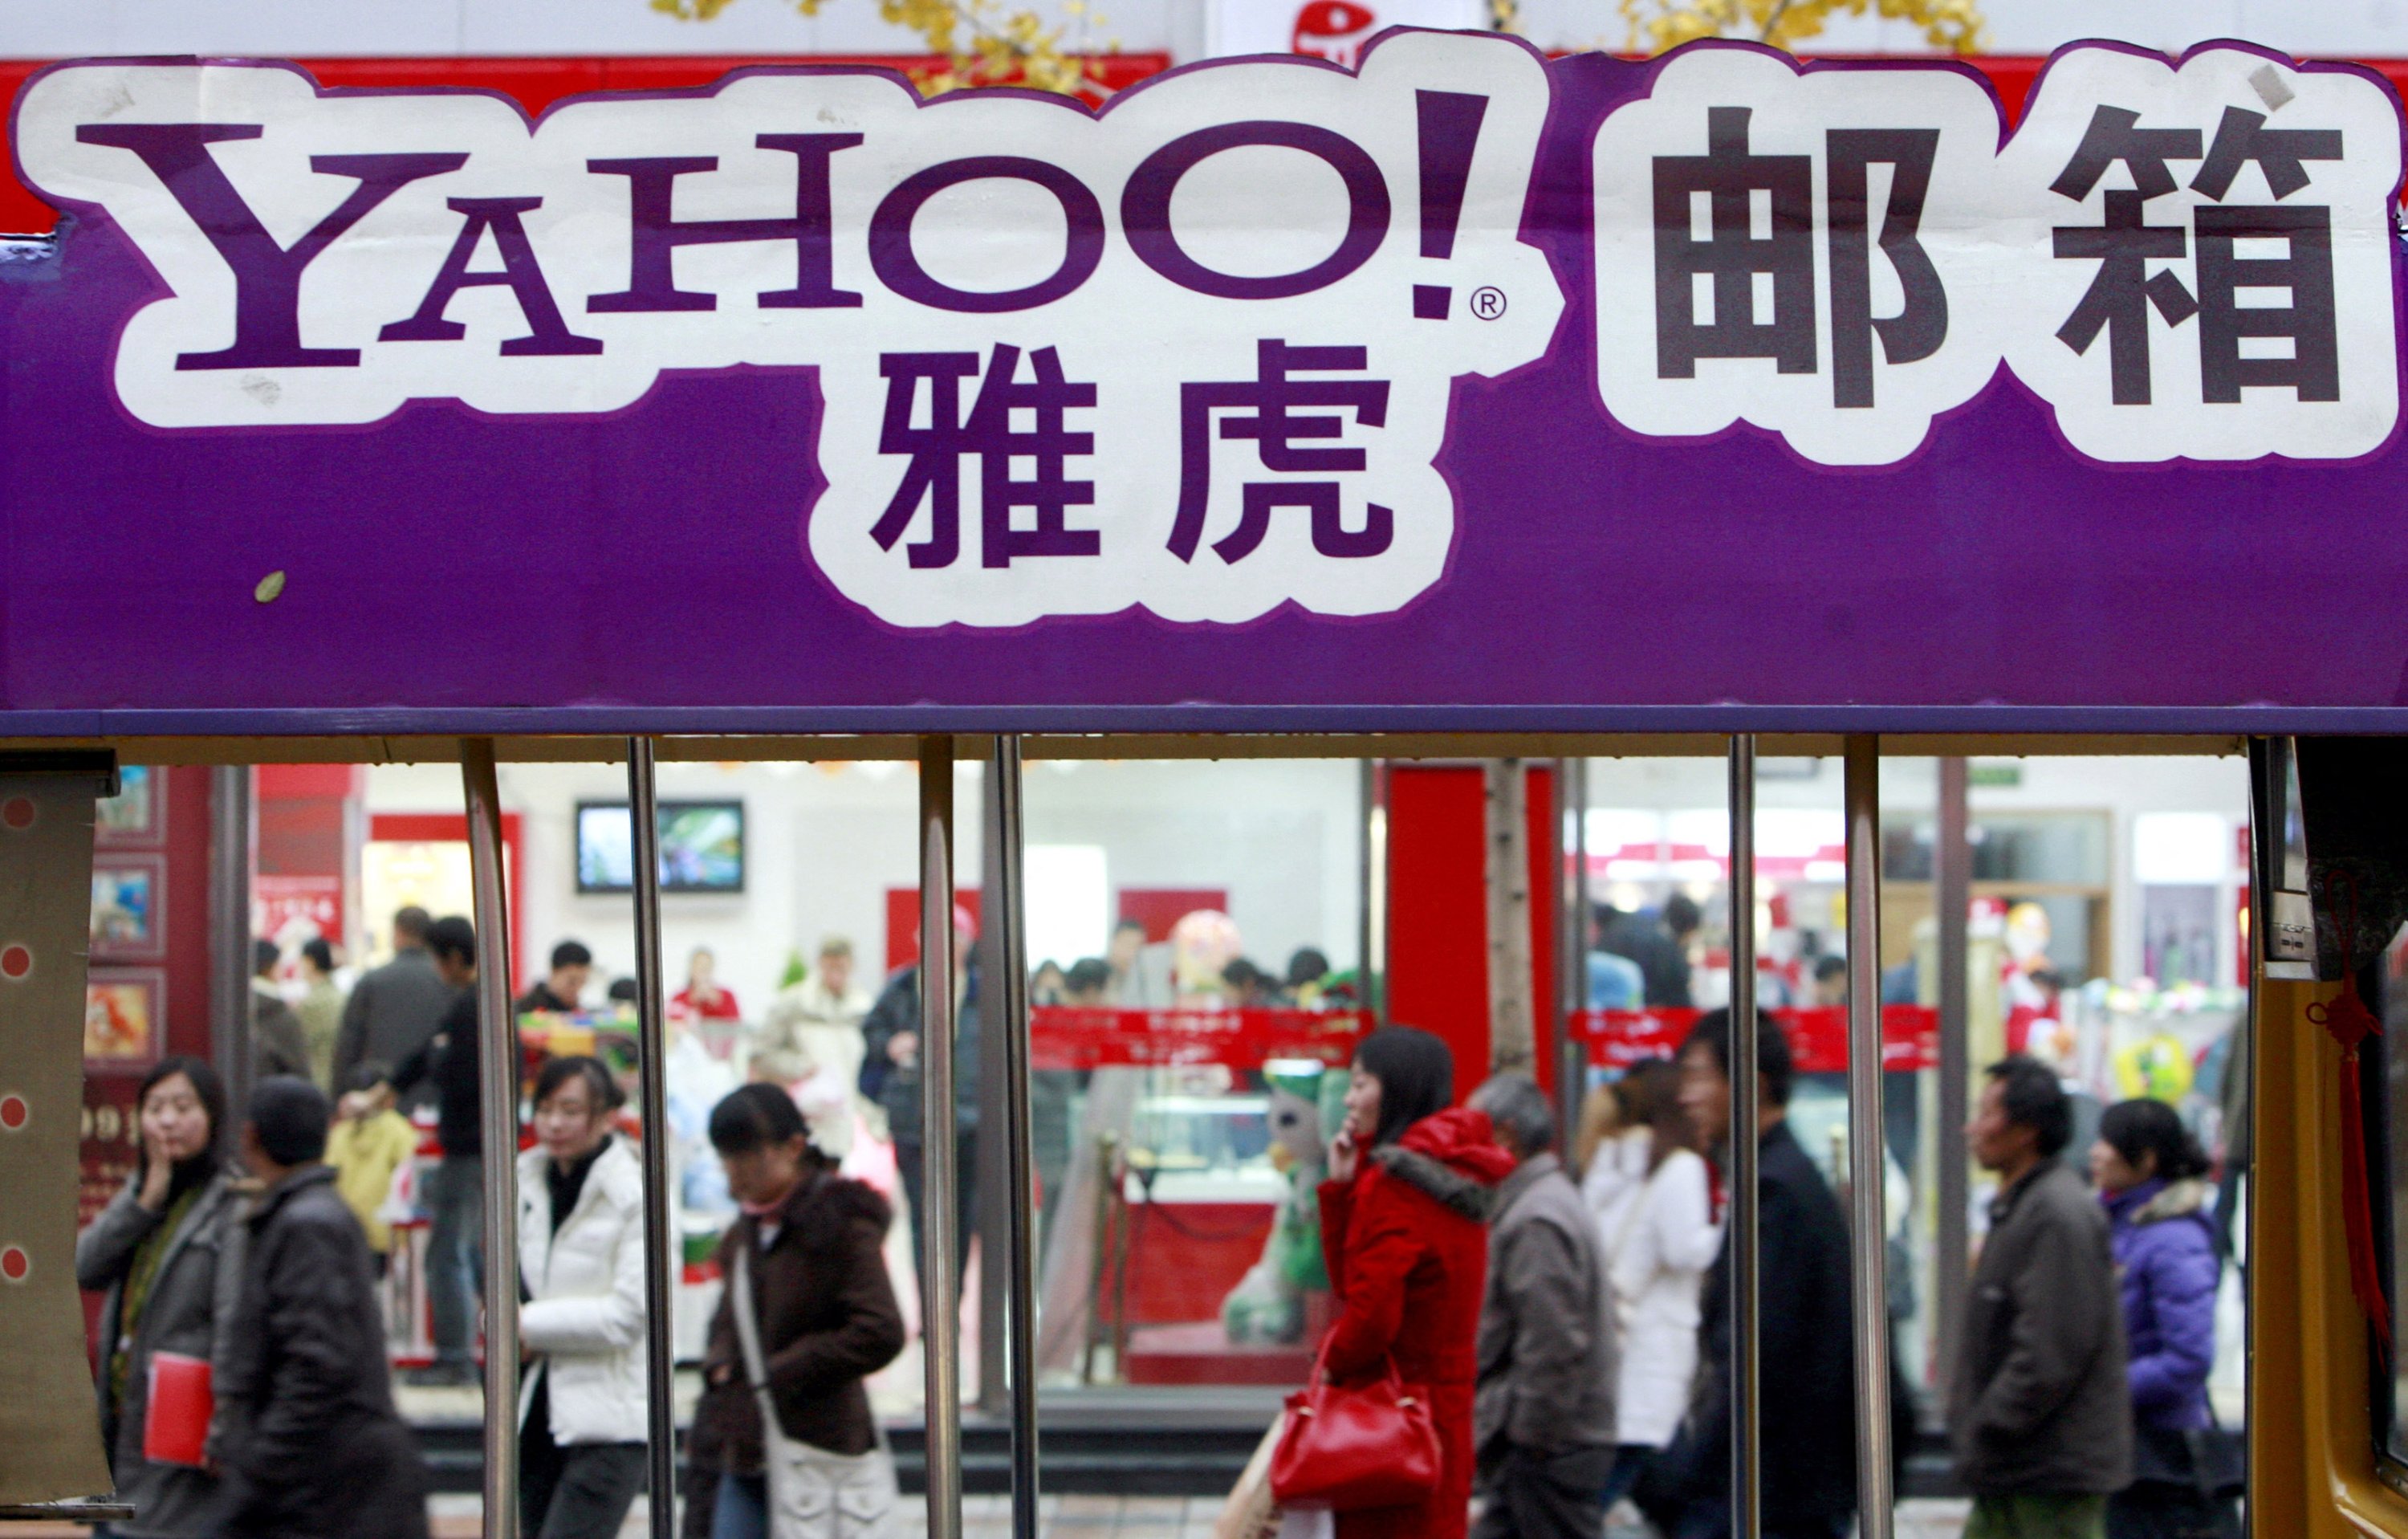 Yahoo will no longer be available from mainland China